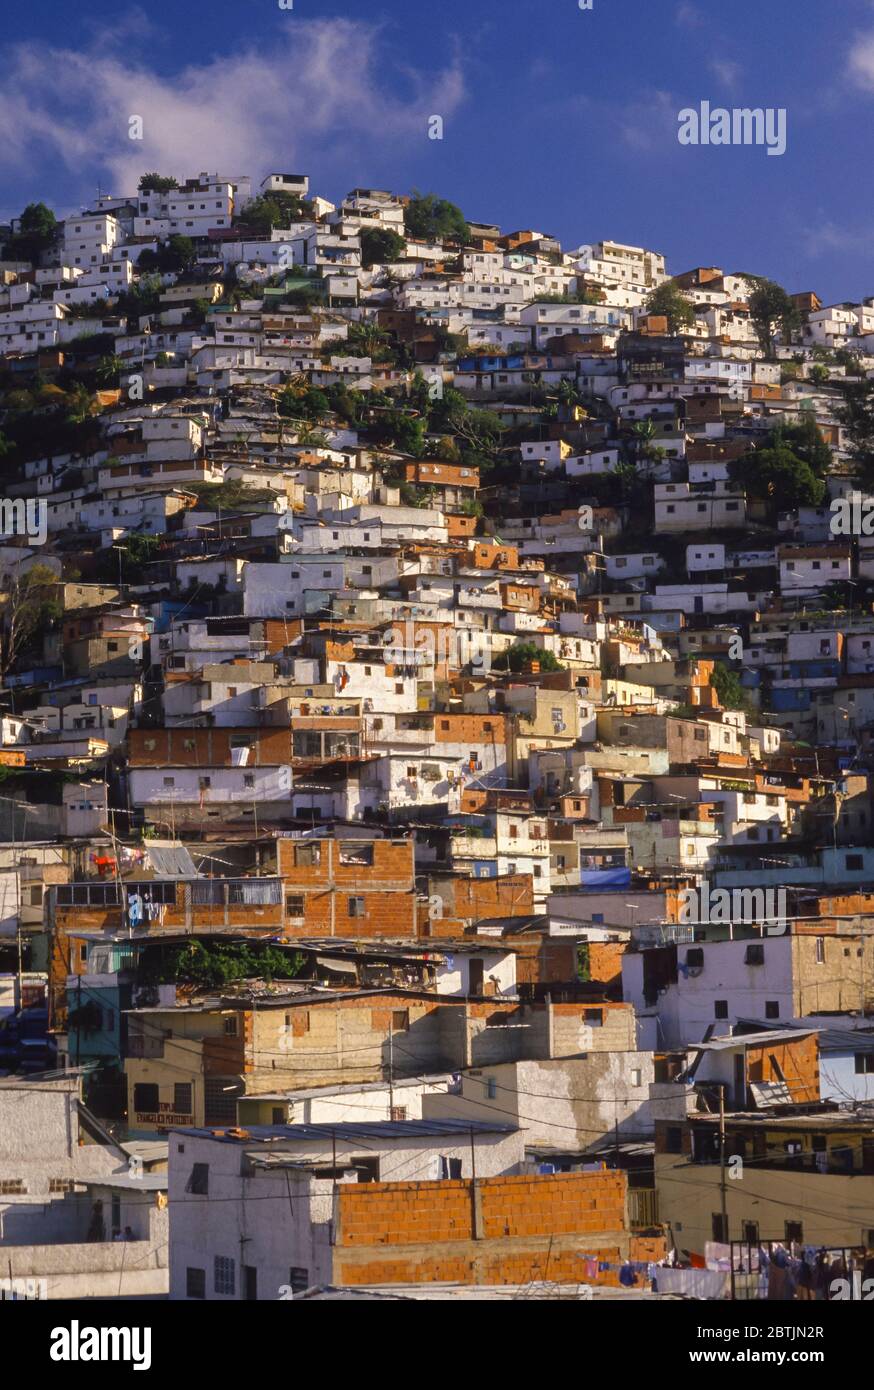 CARACAS, VENEZUELA, FEBRUARY 1987 - Low-income housing ranchitos, slums, on hillside. Stock Photo